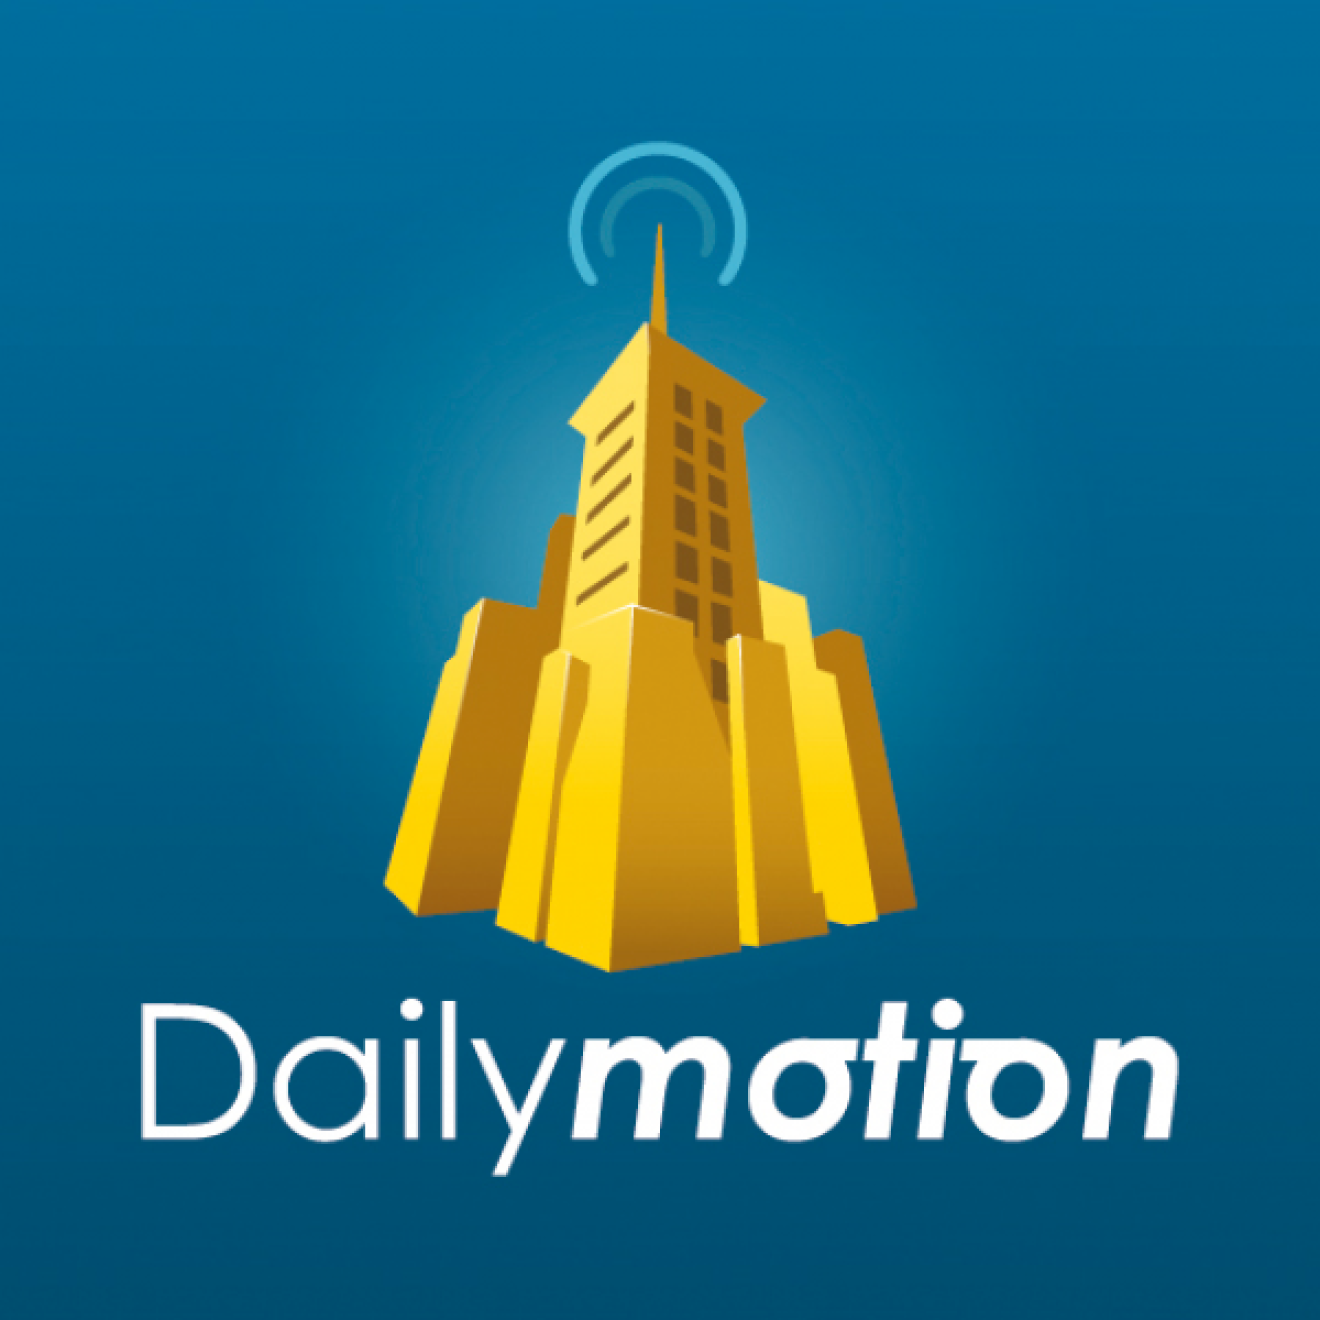 7500 Dailymotion Views / Aufrufe für Dich